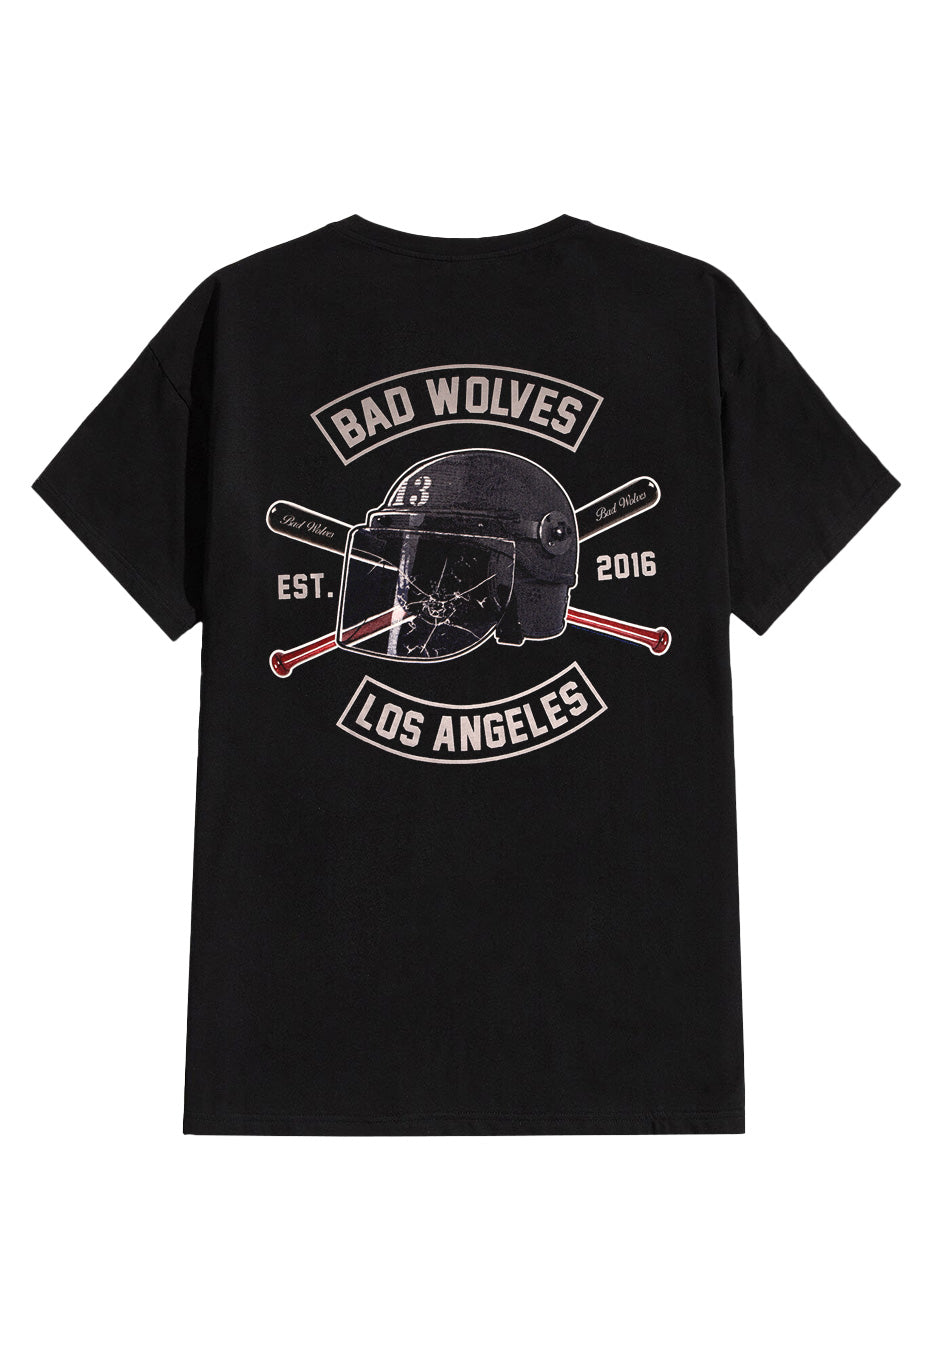 Bad Wolves - Los Angeles - T-Shirt